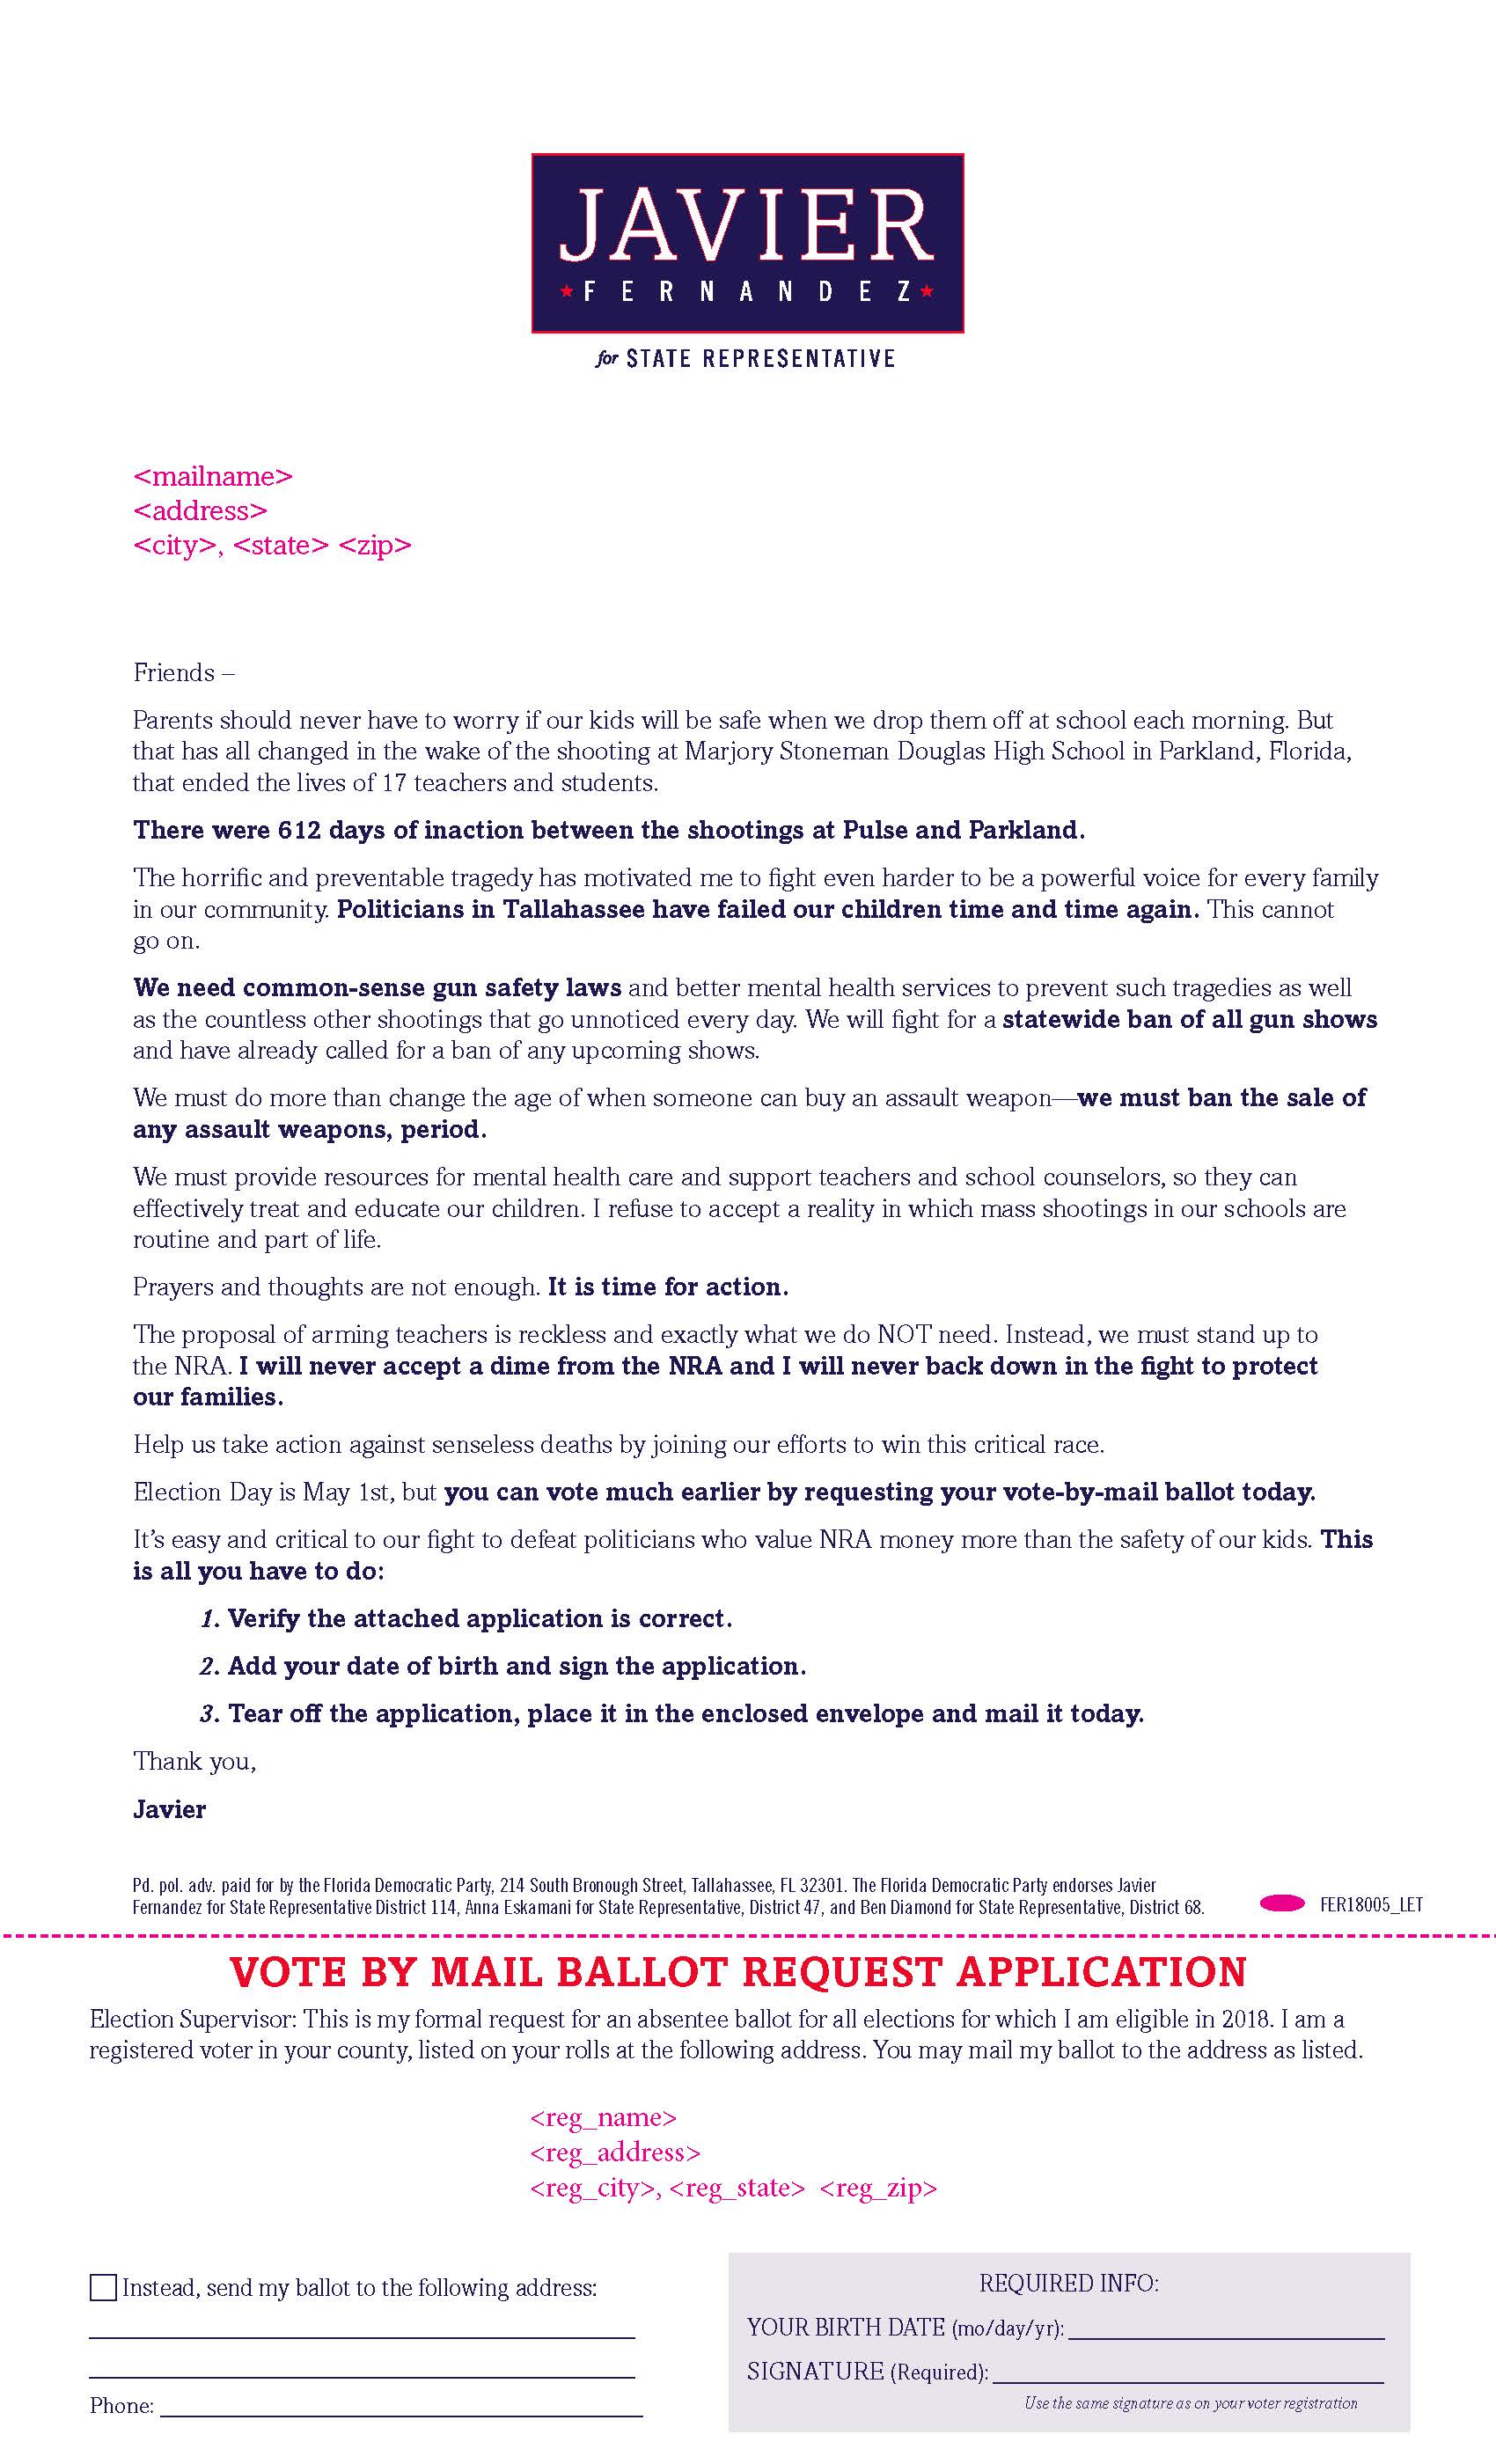 Javier Fernandez - Direct Mail Vote by Mail